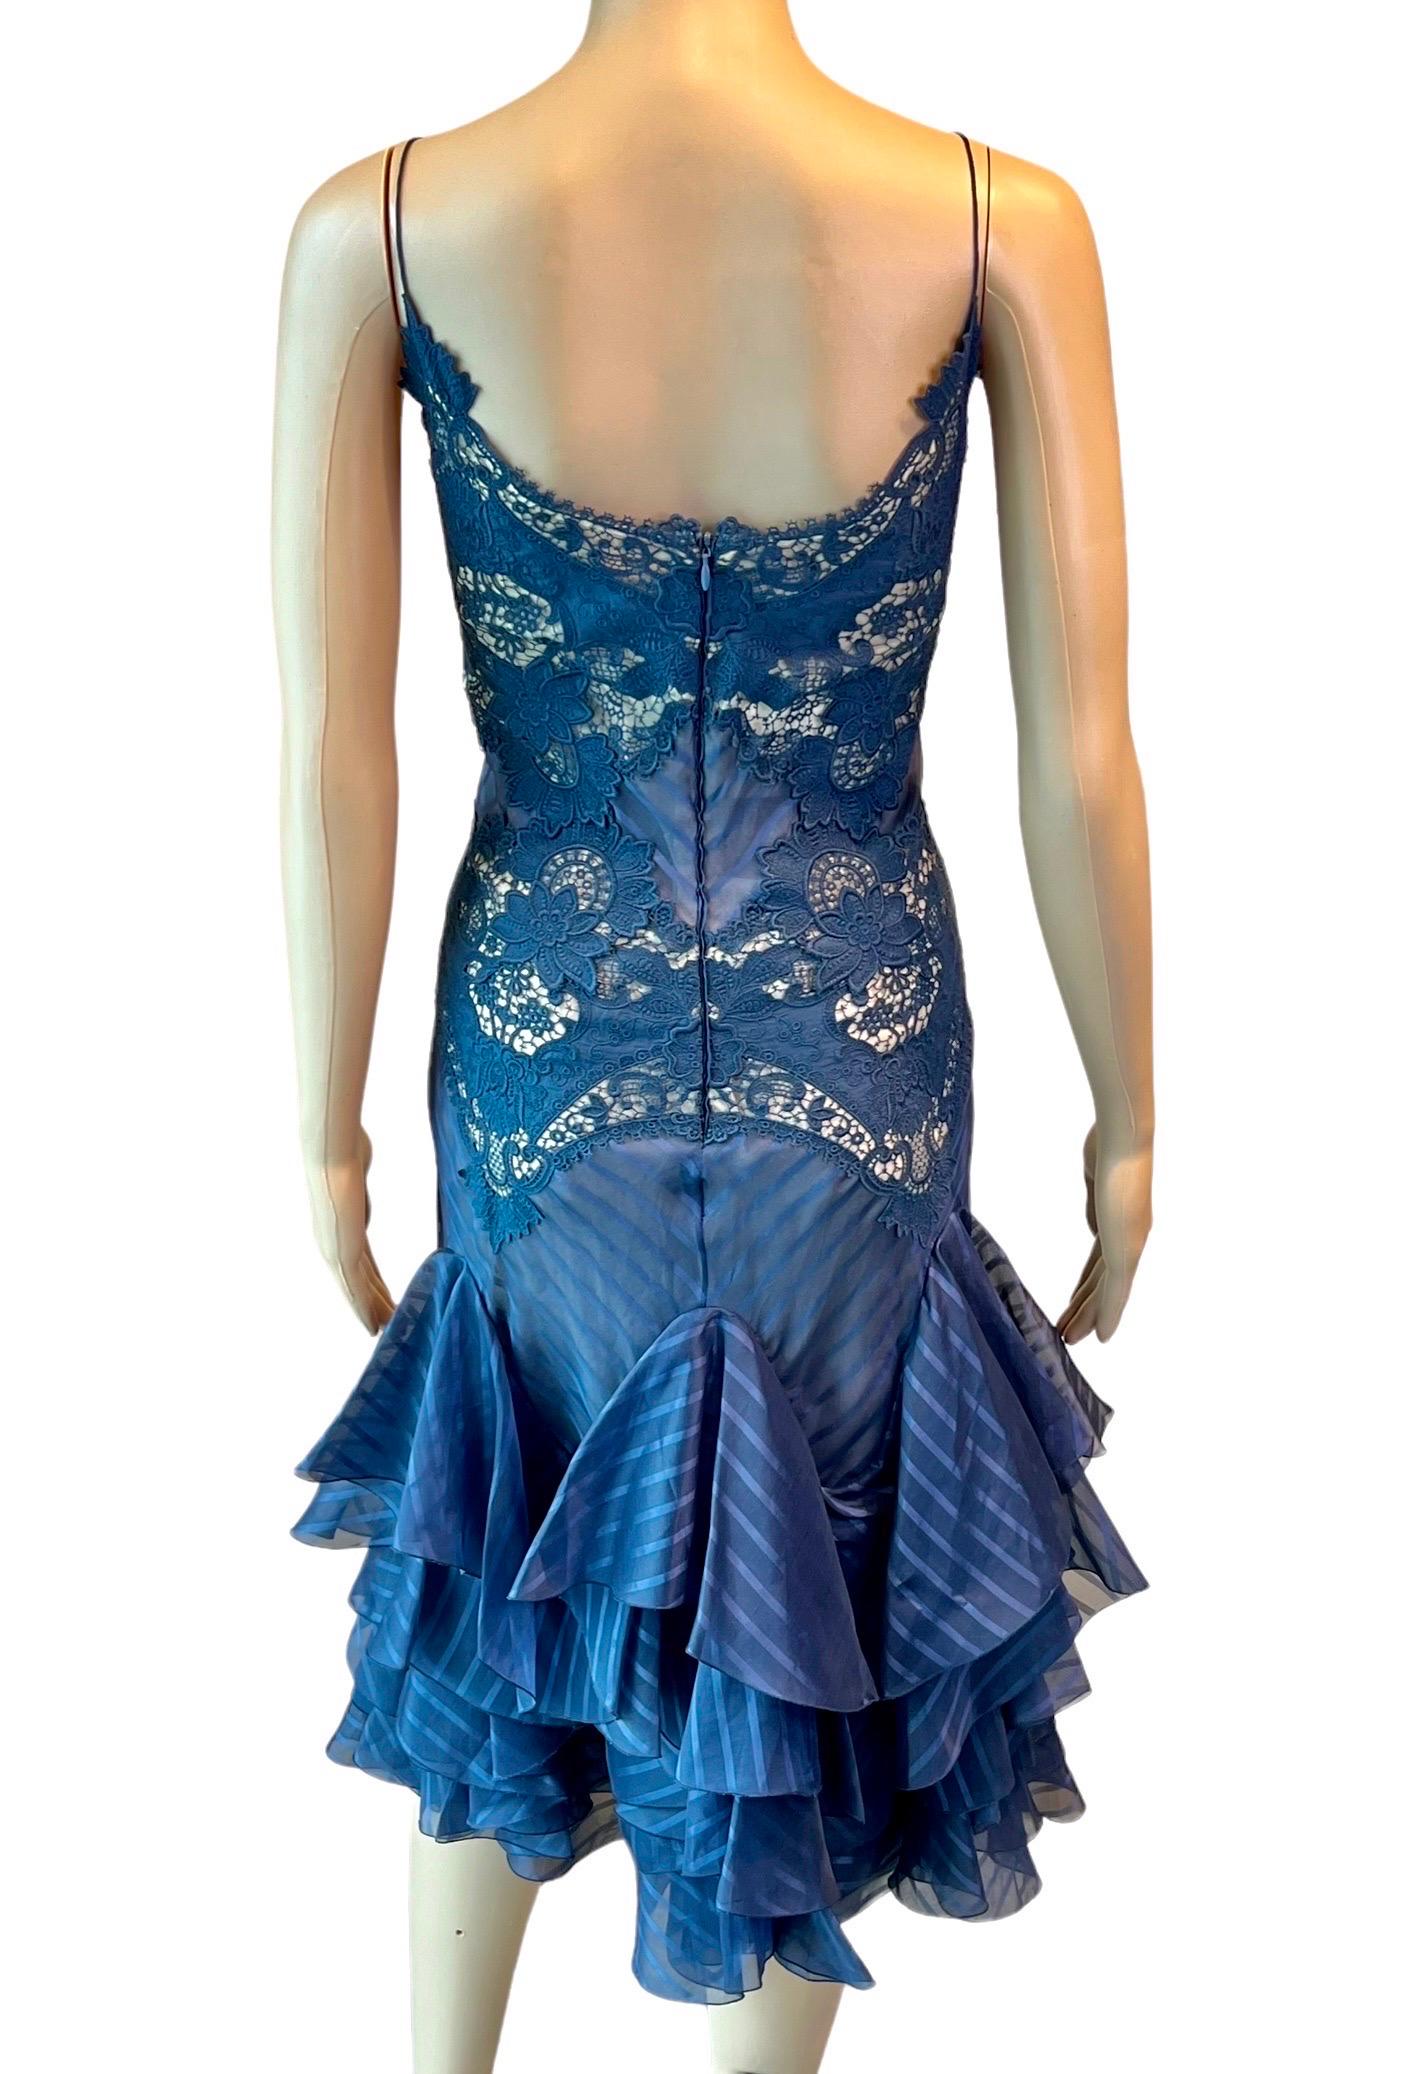 Blue Alexander McQueen S/S 2005 Unworn Semi-Sheer Lace Ruffled Slip Dress  For Sale